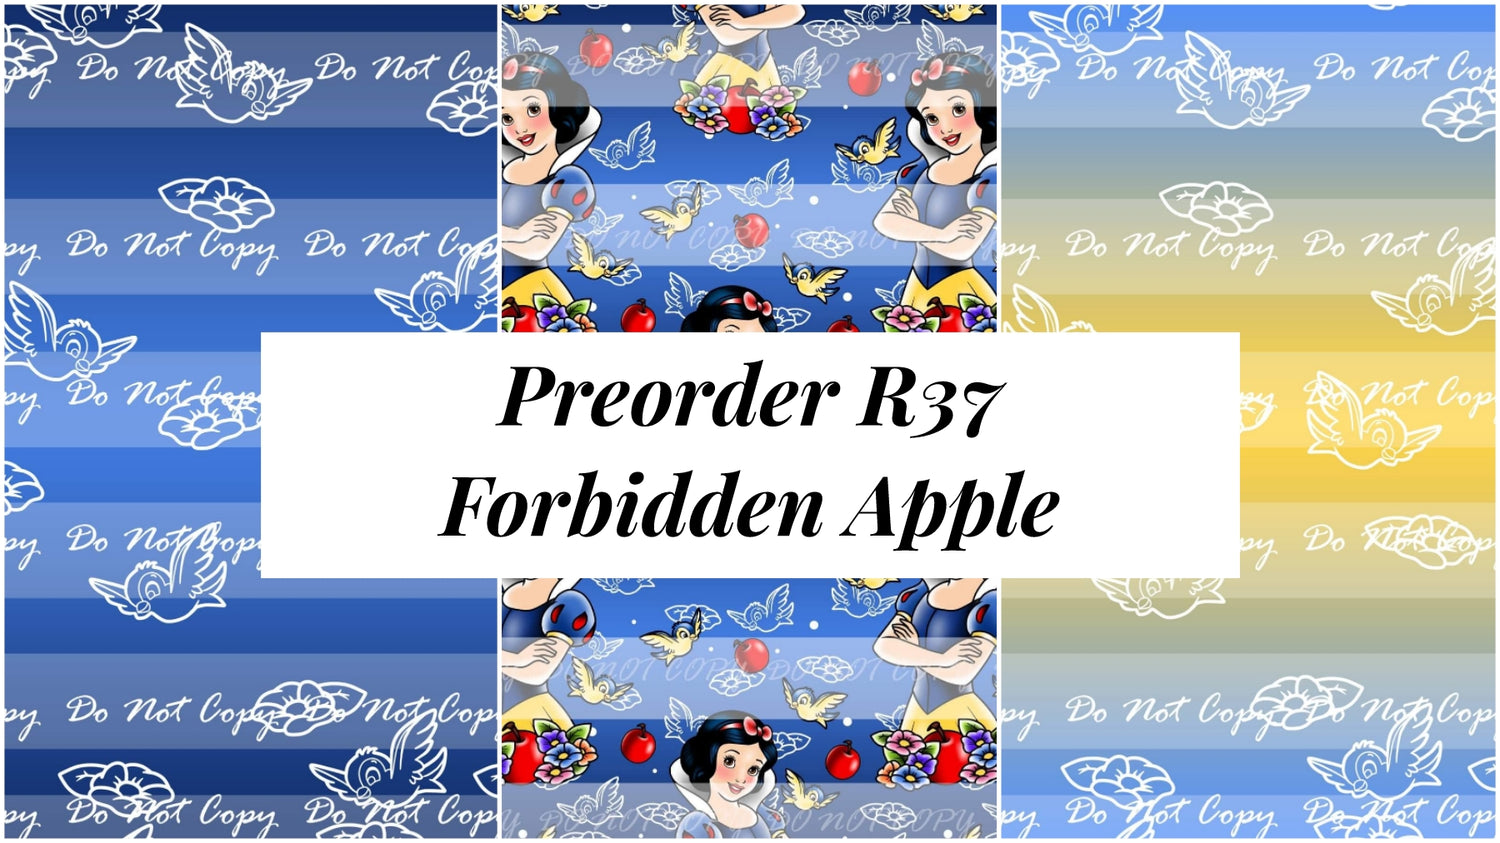 Preorder R37 Forbidden Apple